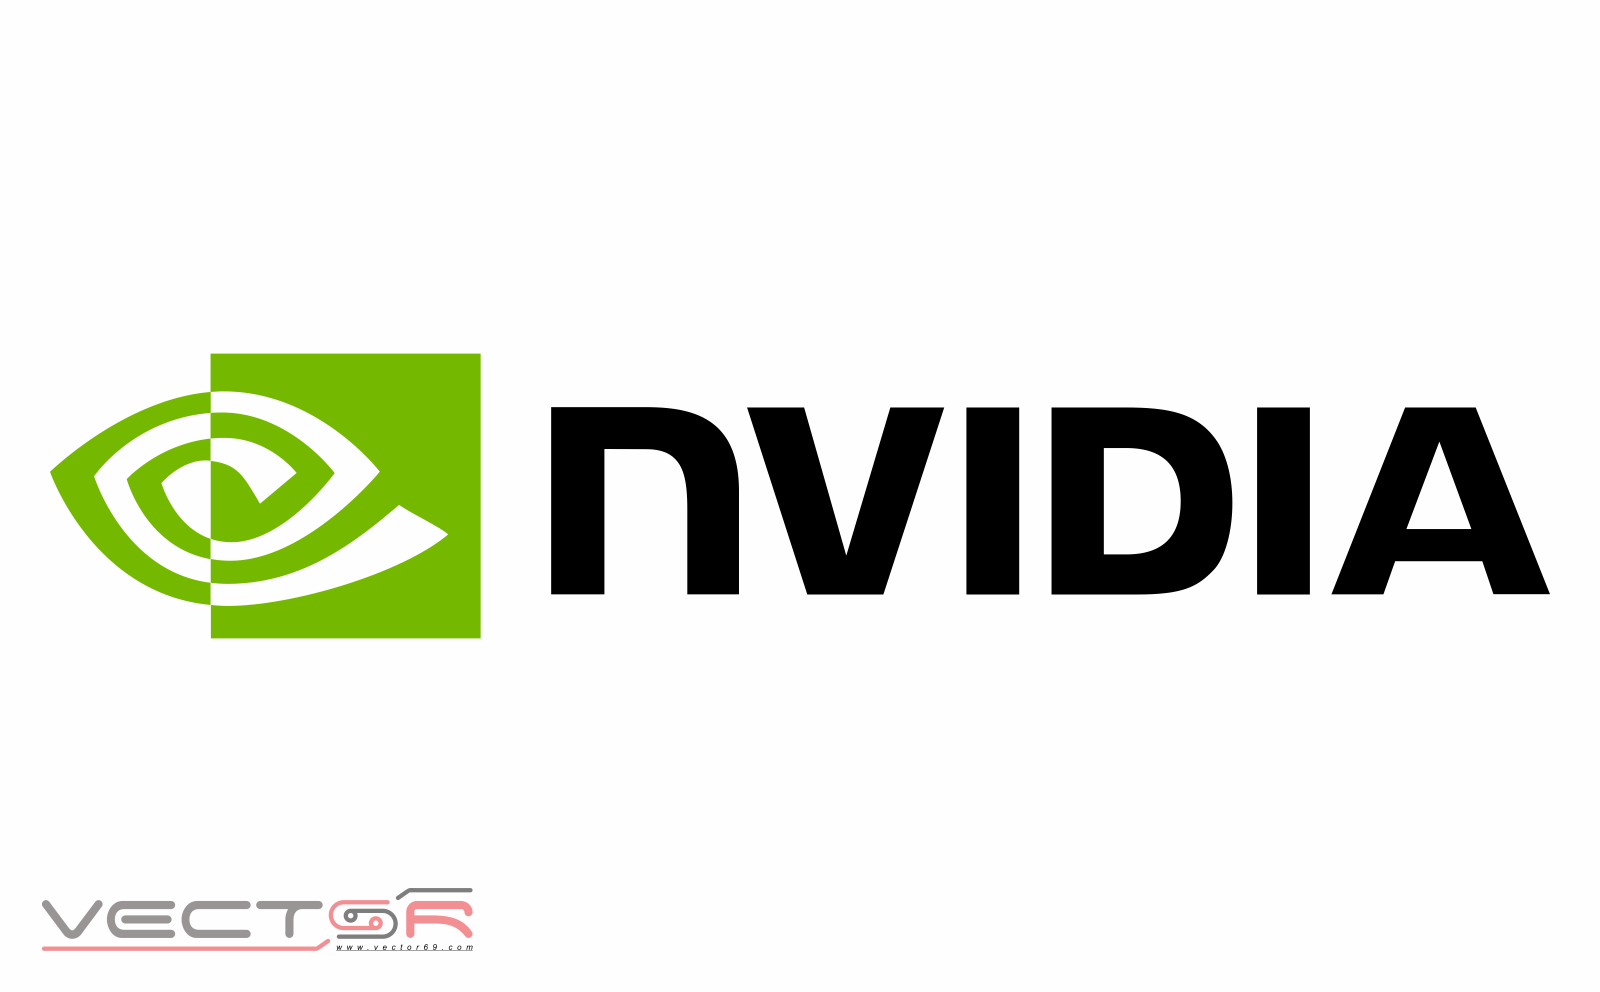 NVIDIA Logo - Download Transparent Images, Portable Network Graphics (.PNG)